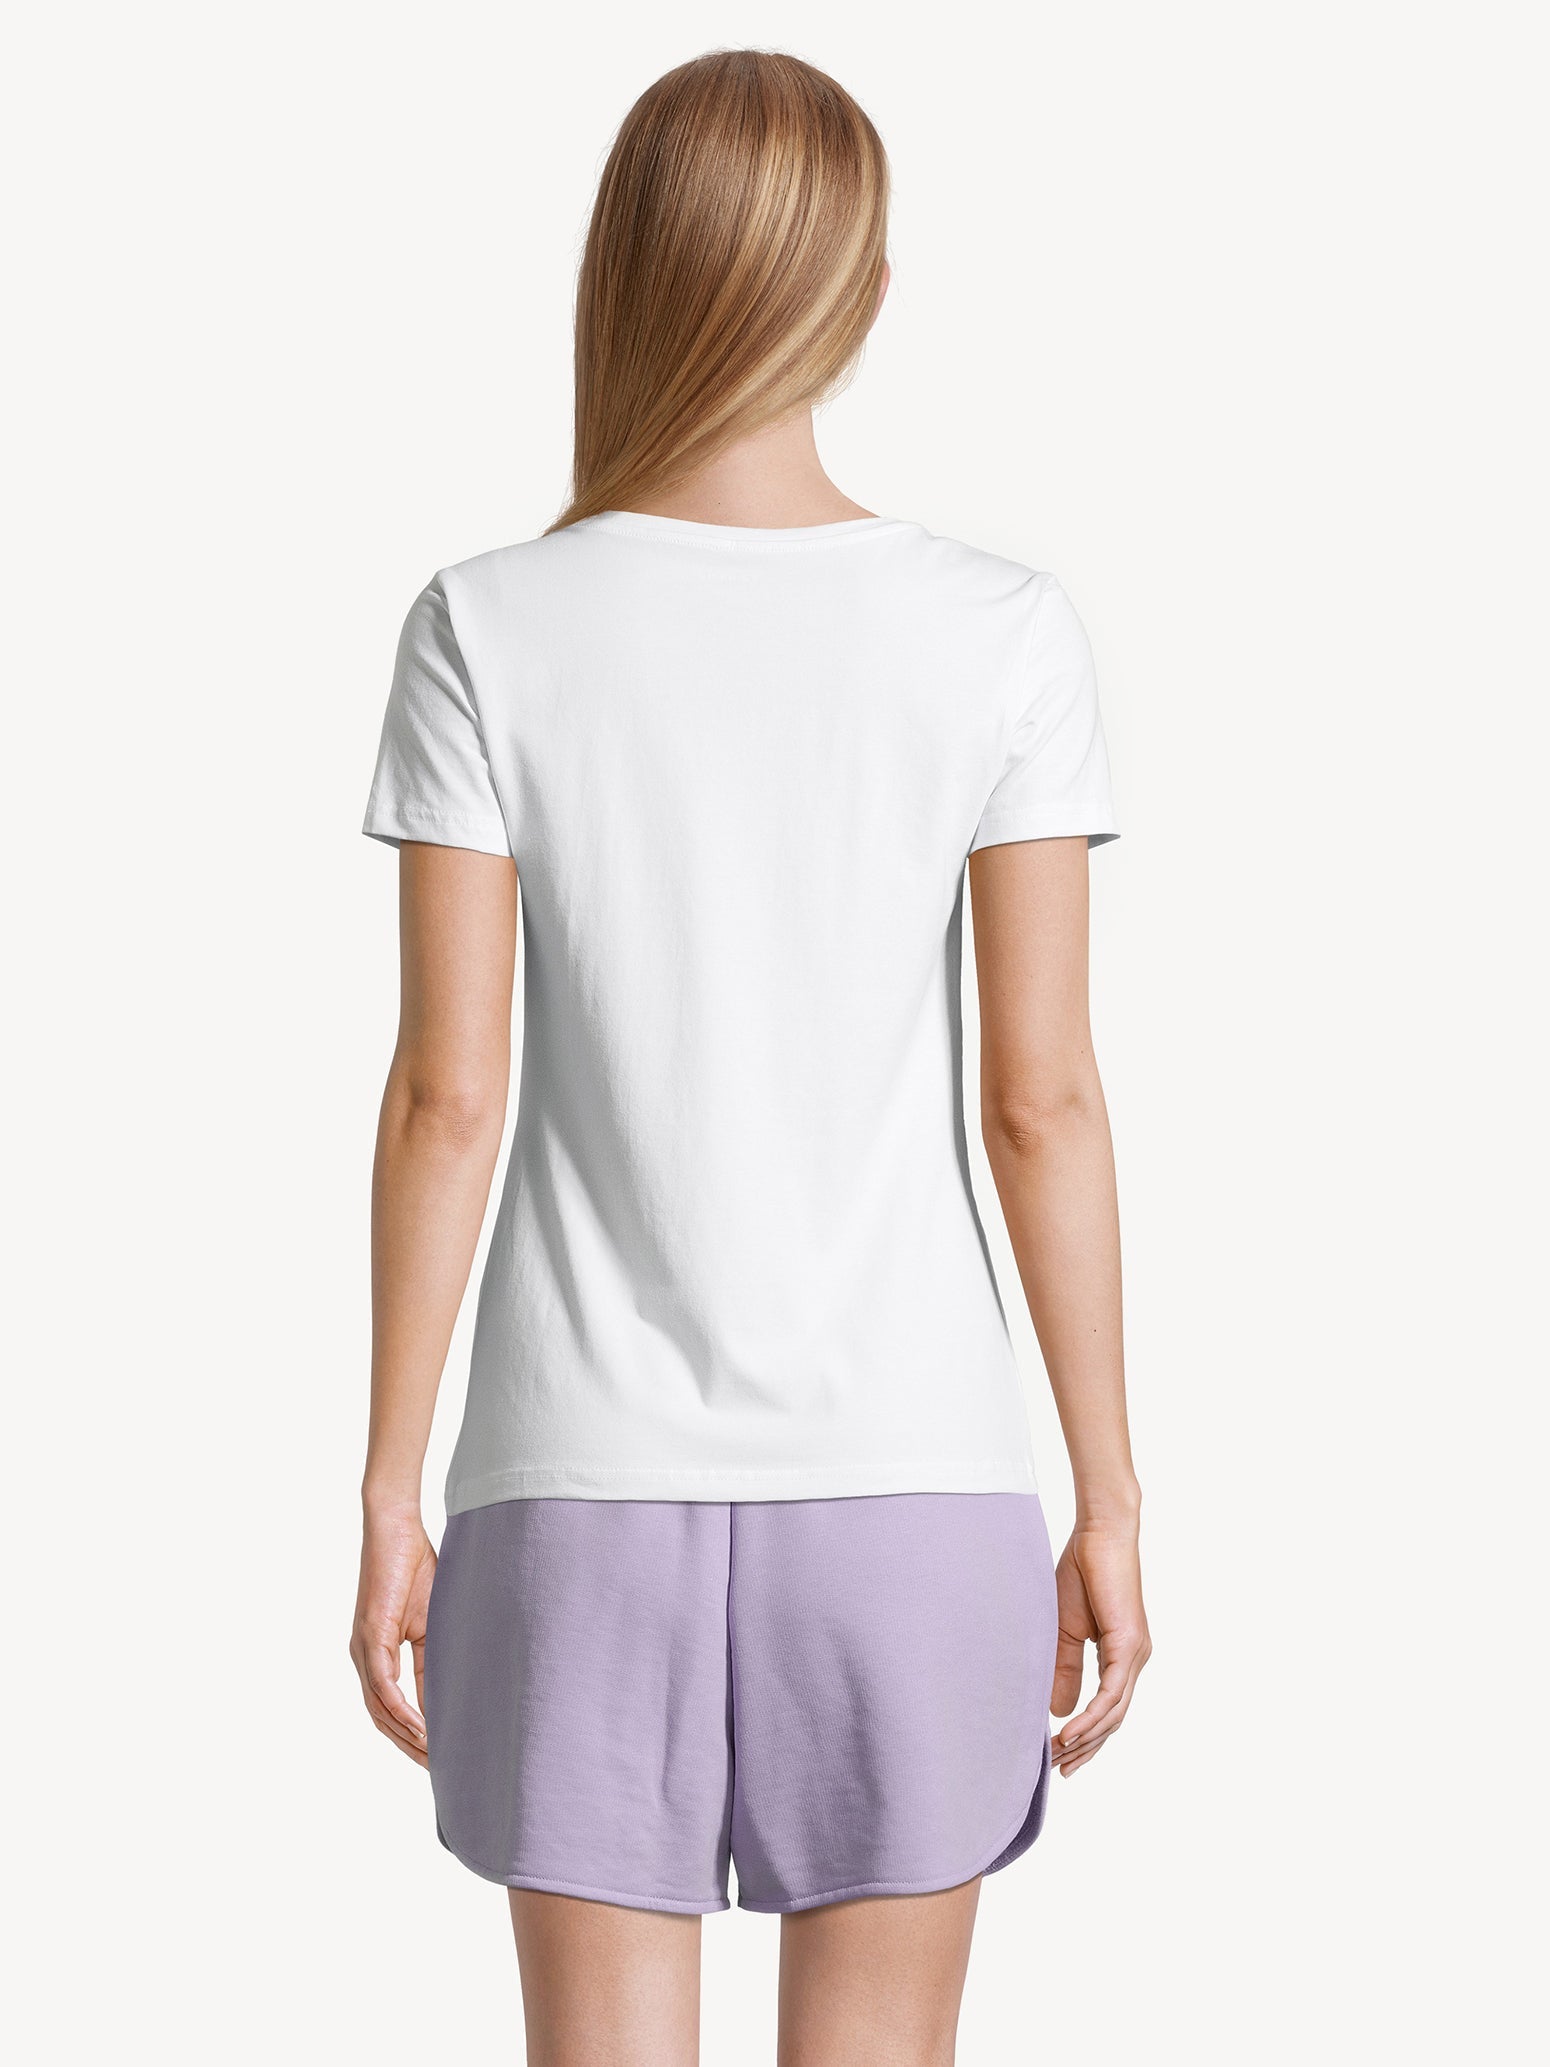 Alba Deep Neck Slim Tee in Bright White T-Shirts Tamaris   